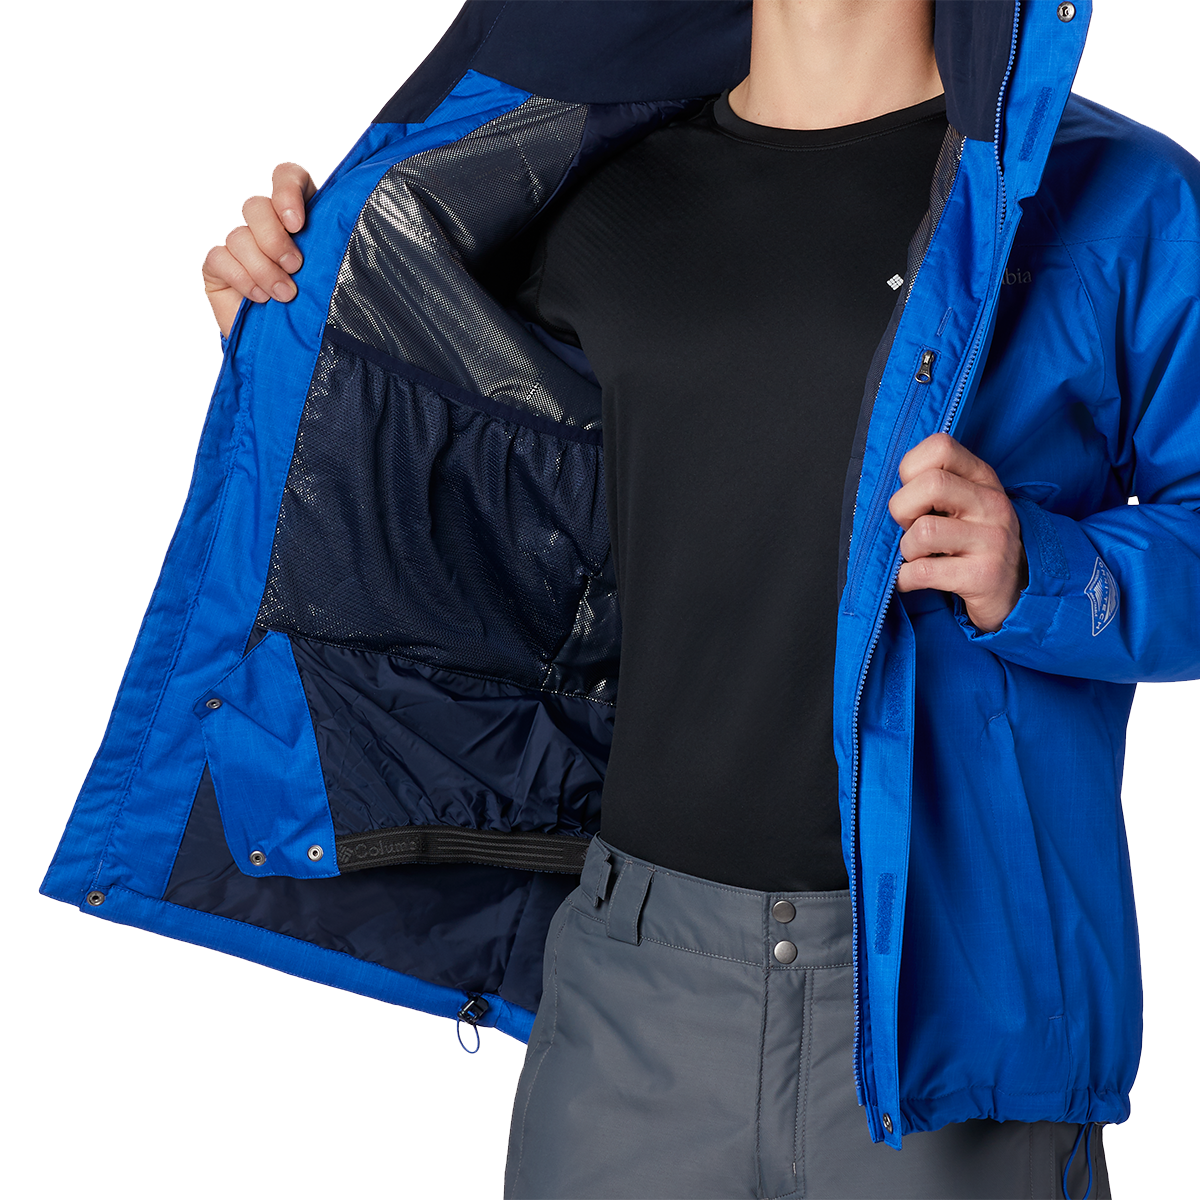 Columbia Men's Alpine Action Insulated Ski Jacket Blue Color Size 2XL